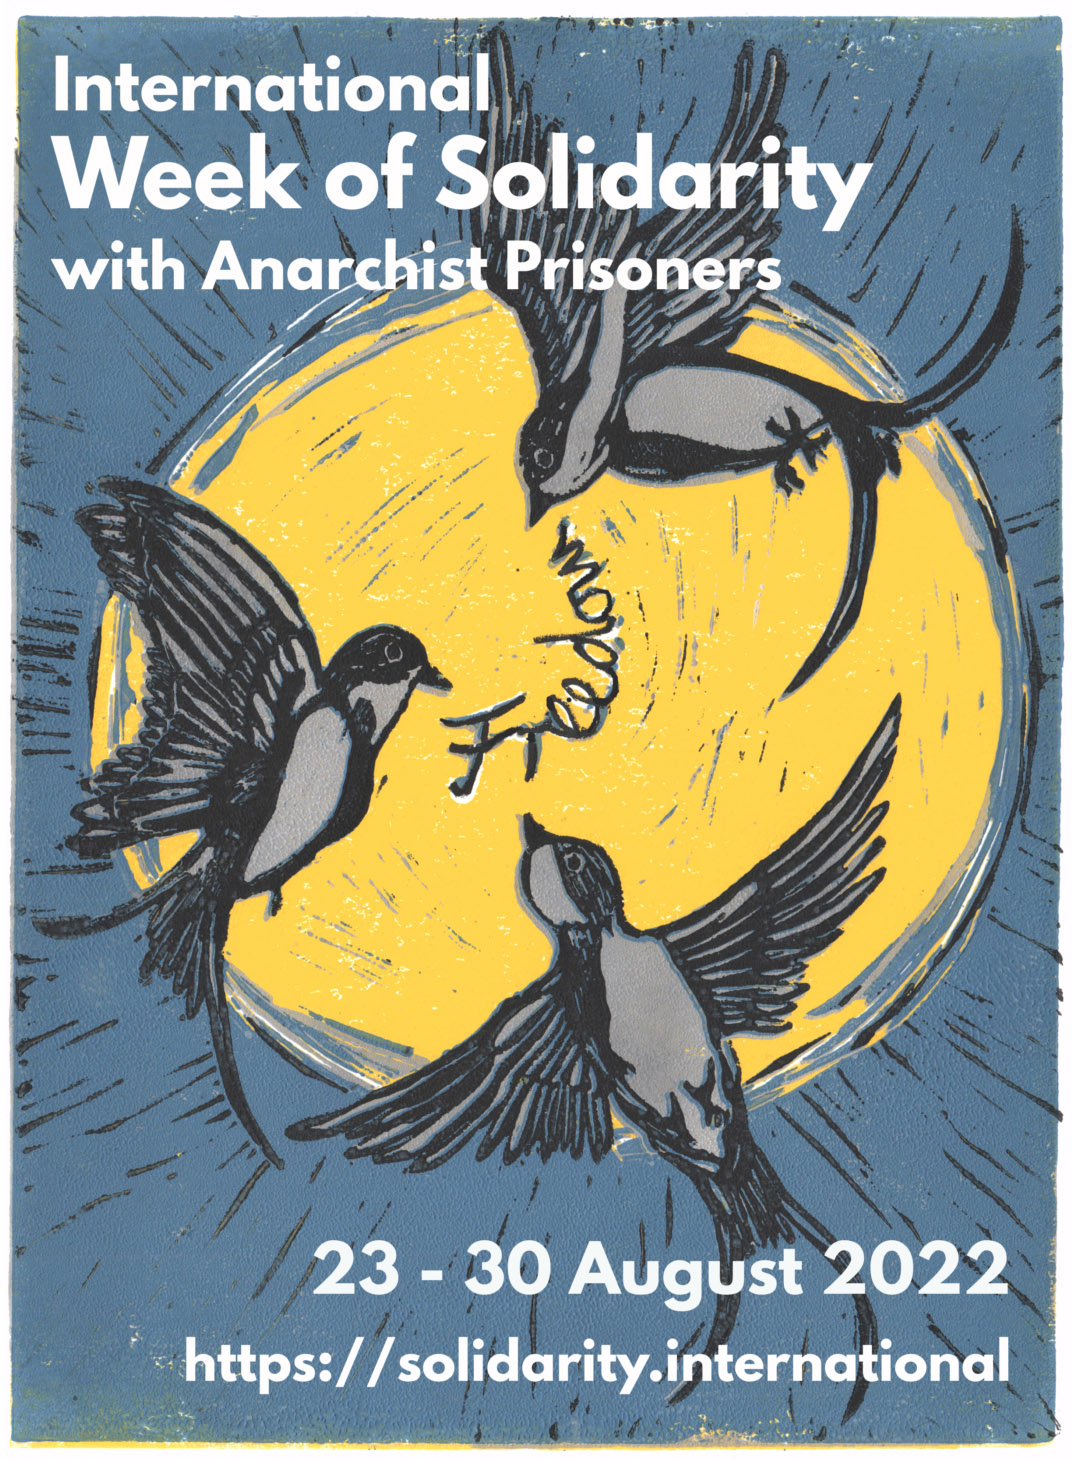 International Week of Solidarity with Anarchist Prisoners 2022